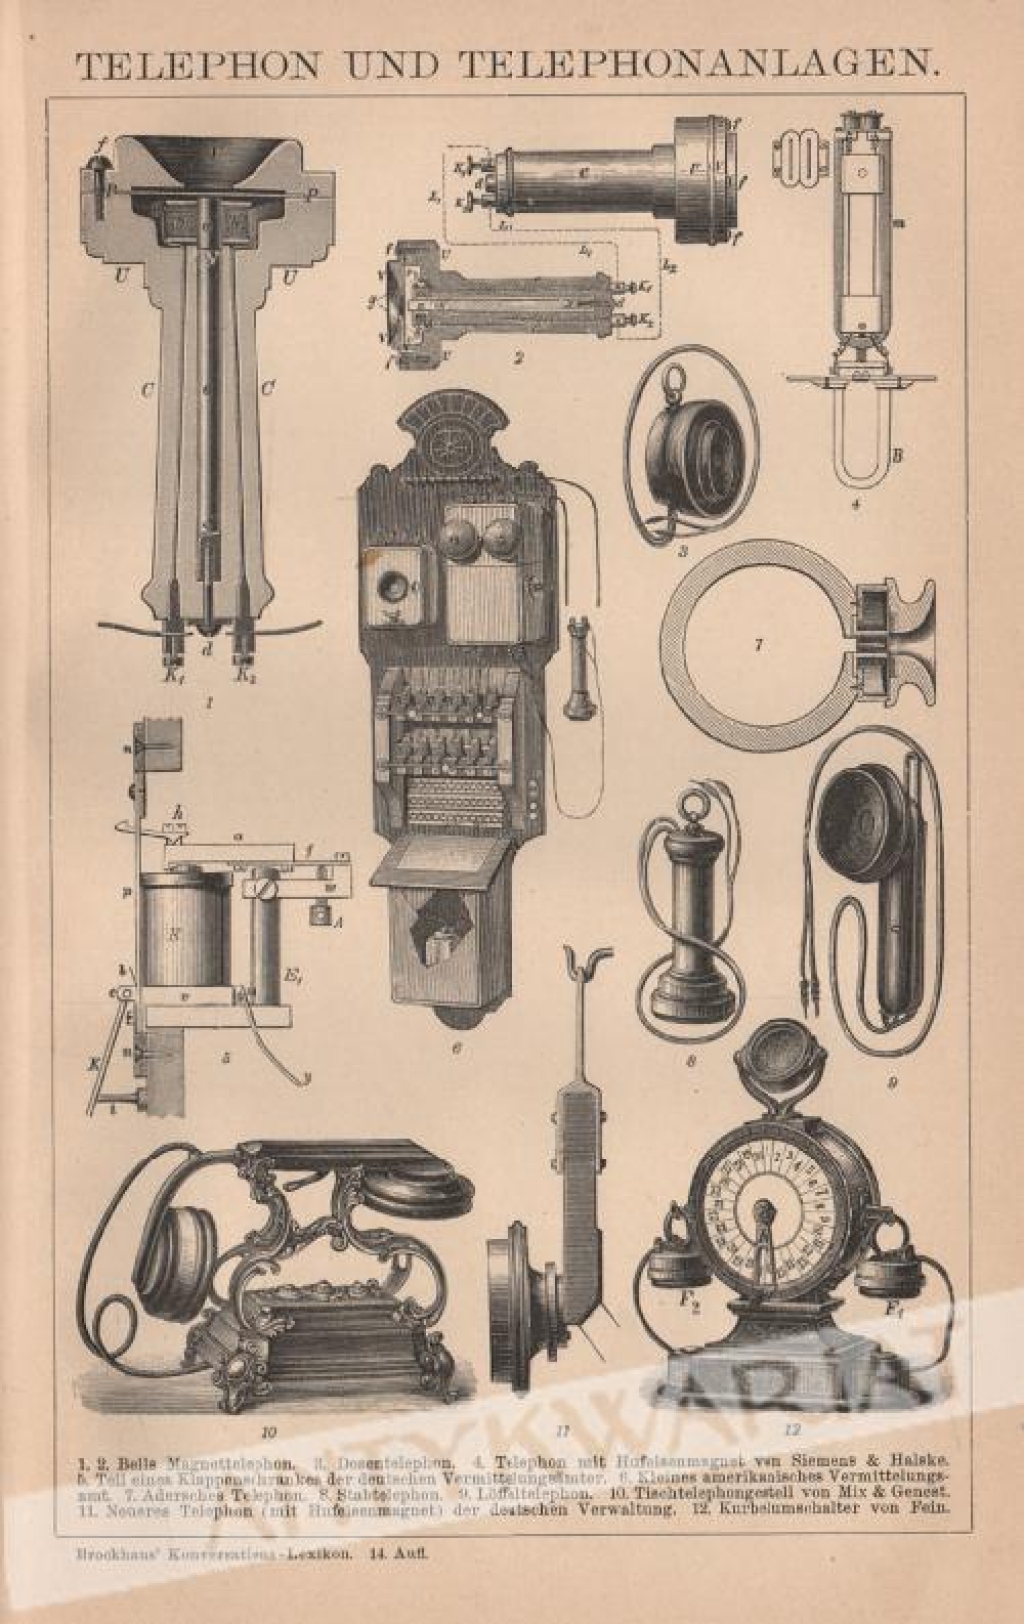 [rycina, 1898] Telephon und Telephonanlangen [telefony]